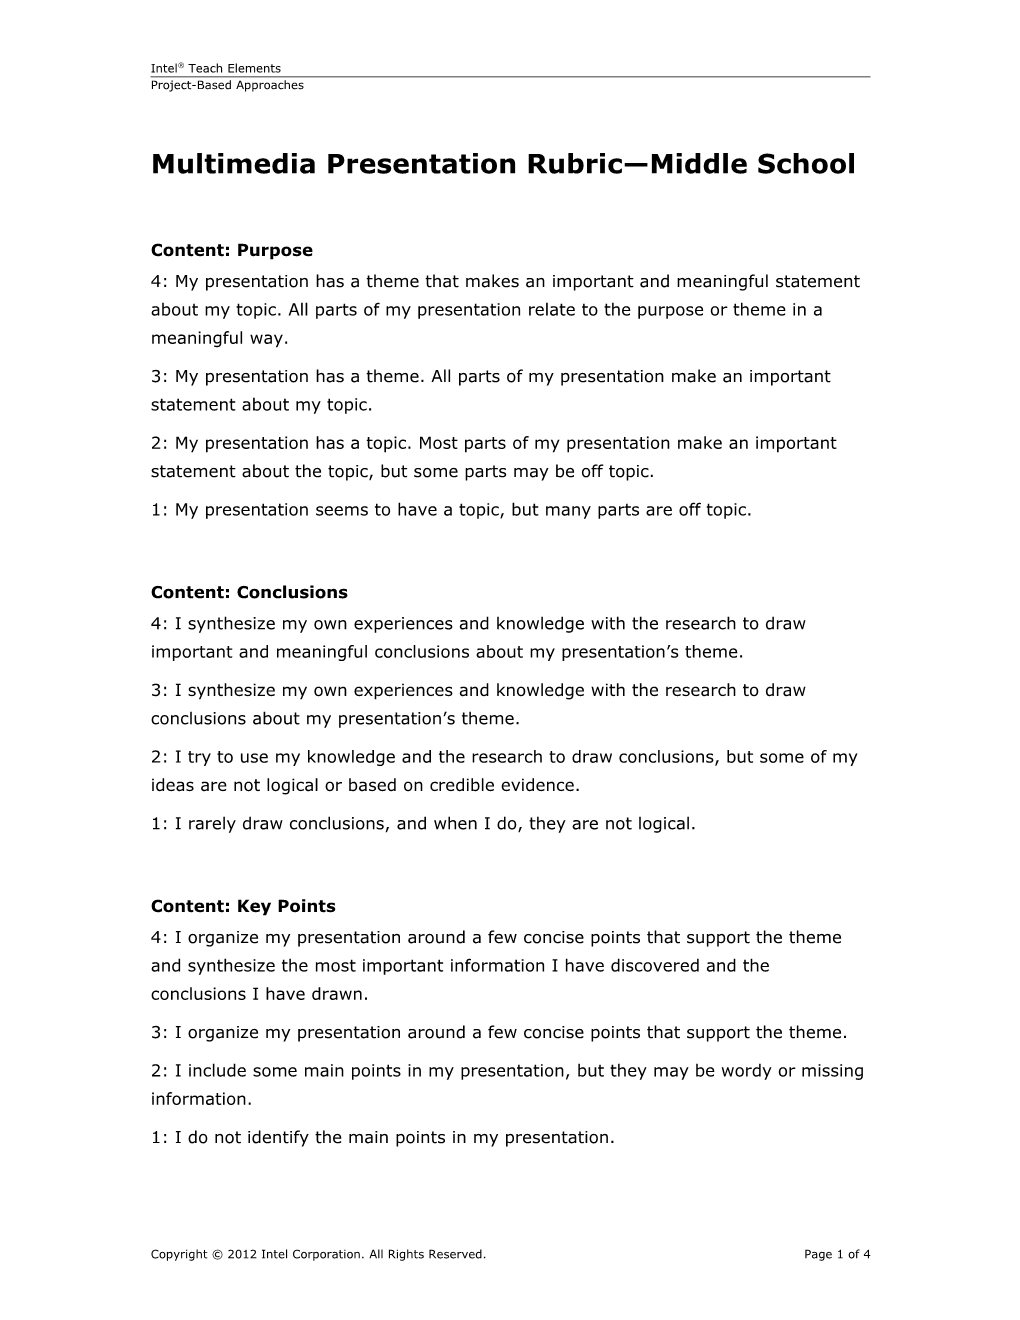 Multimedia Presentation Rubric Middle School